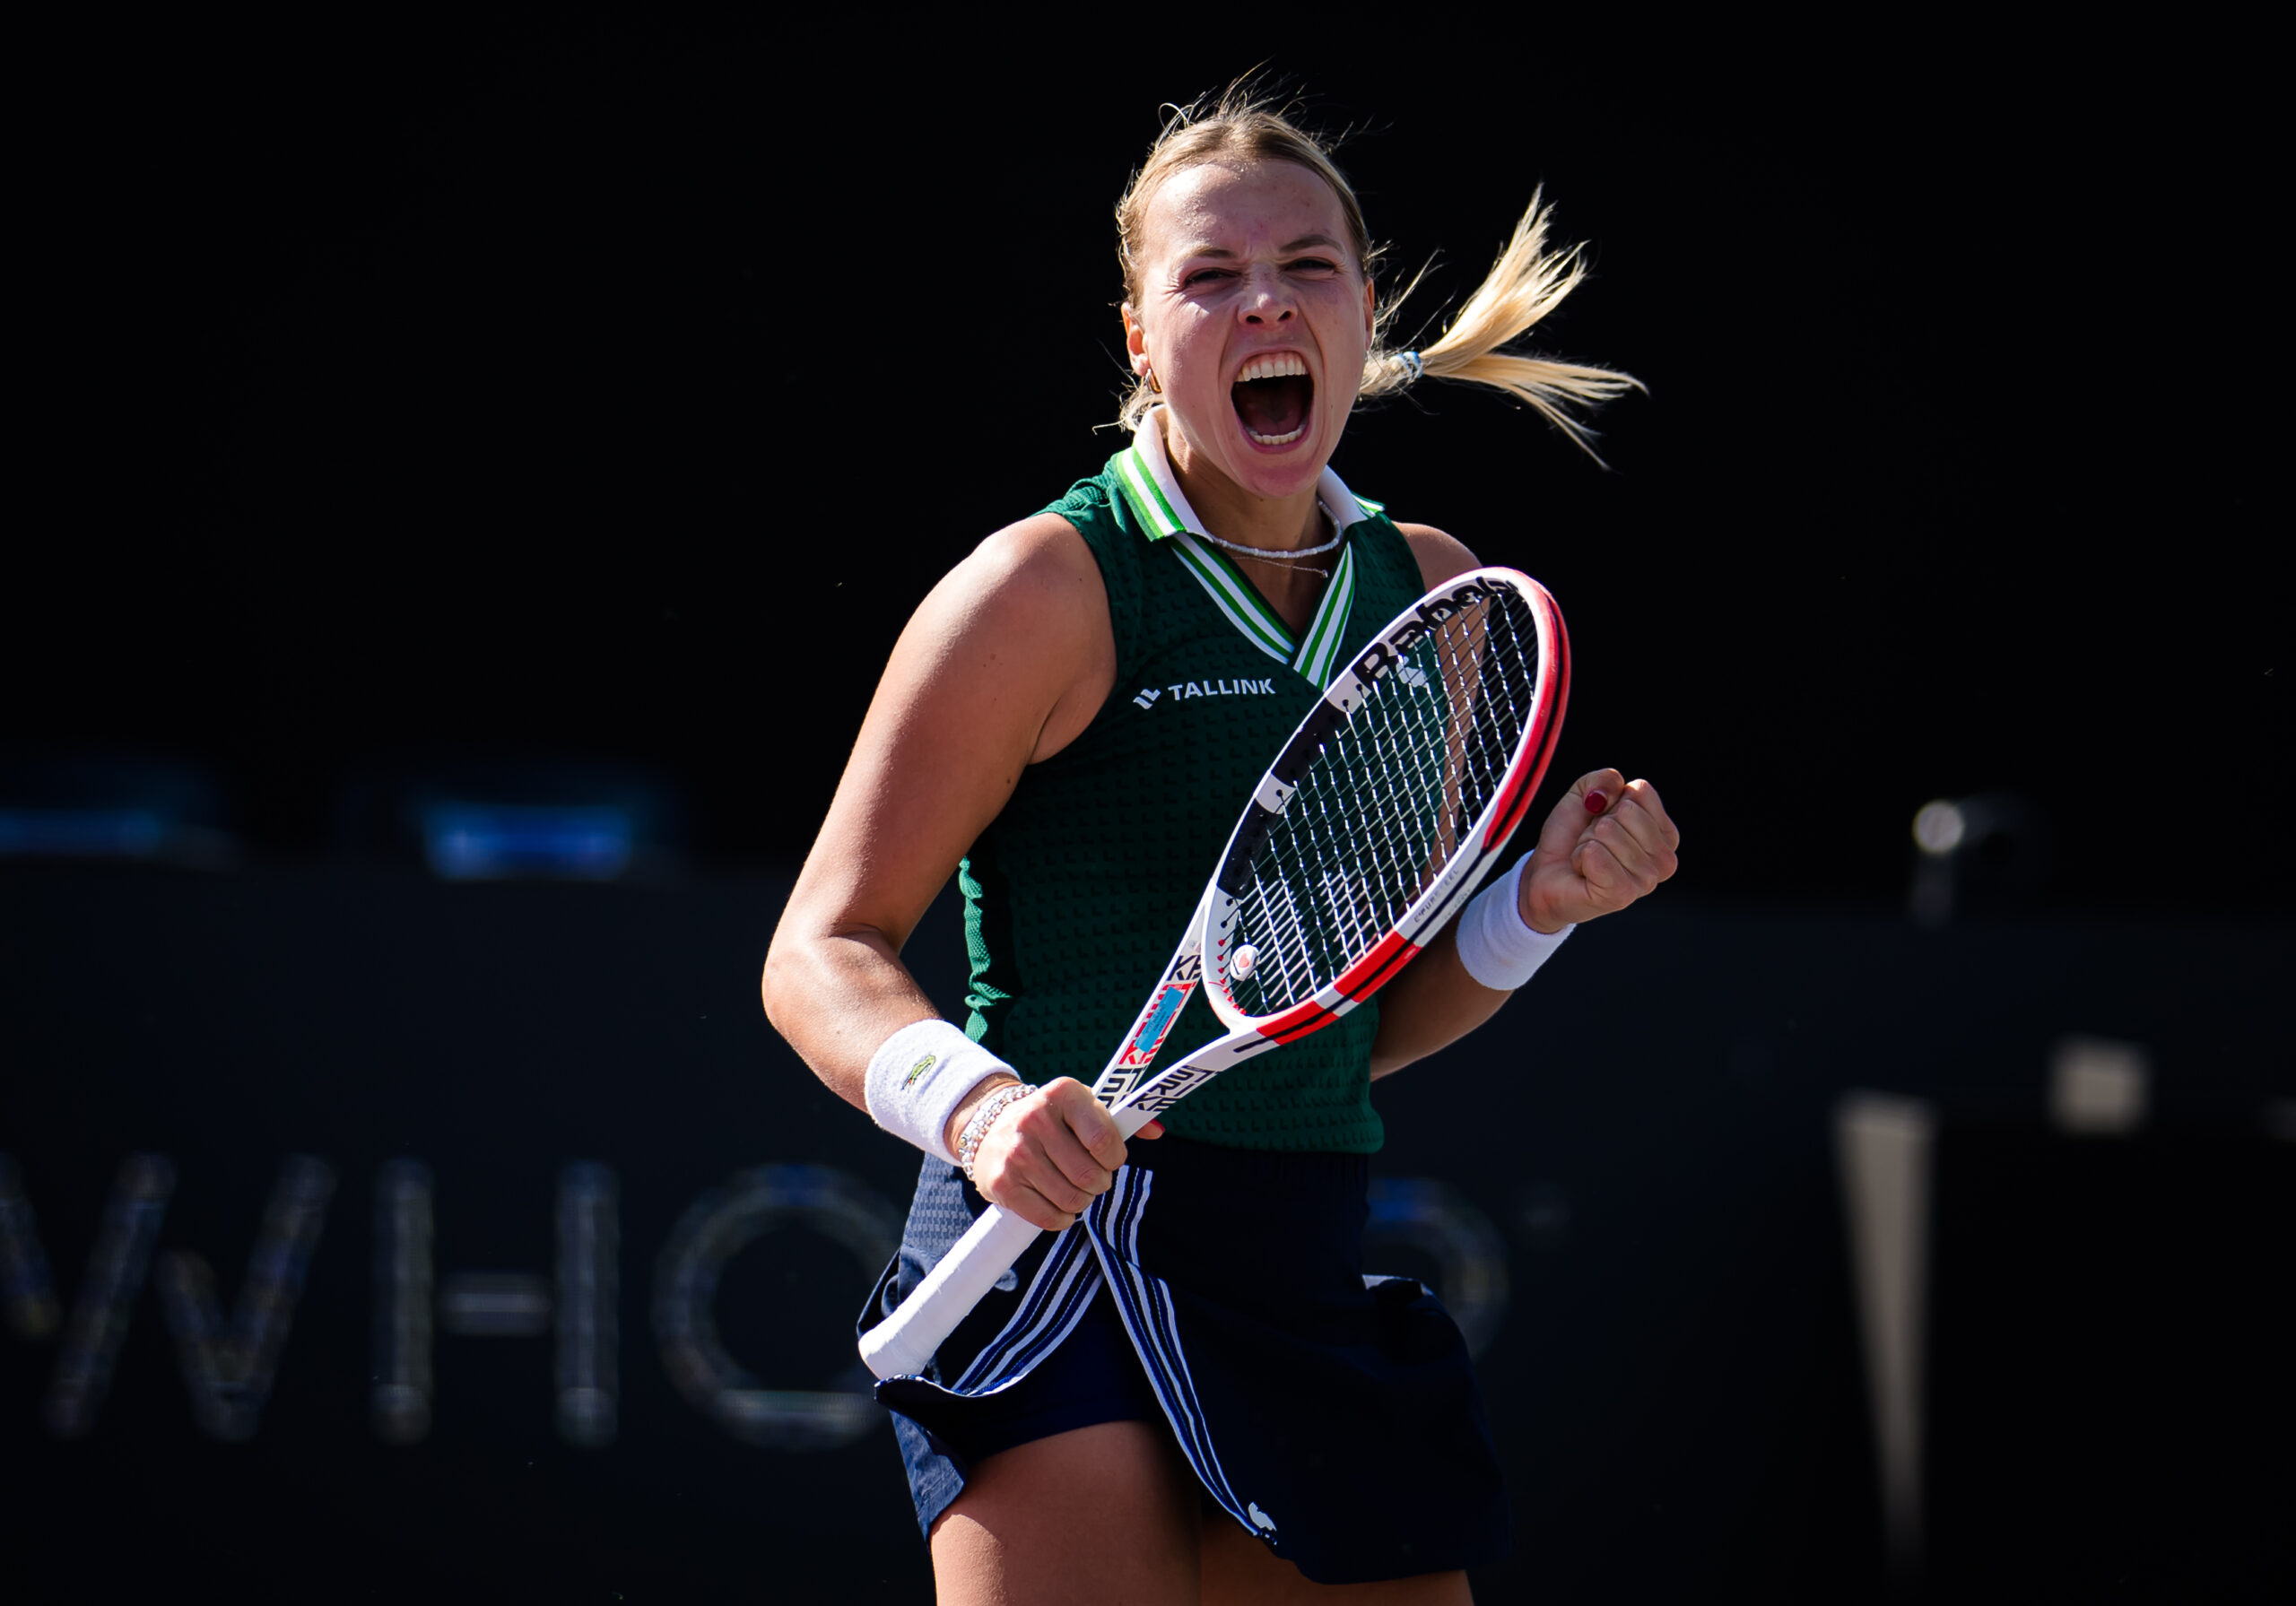 WTA 250 TALLINN OPEN tennis tournament in Estonia 24.09-2.10